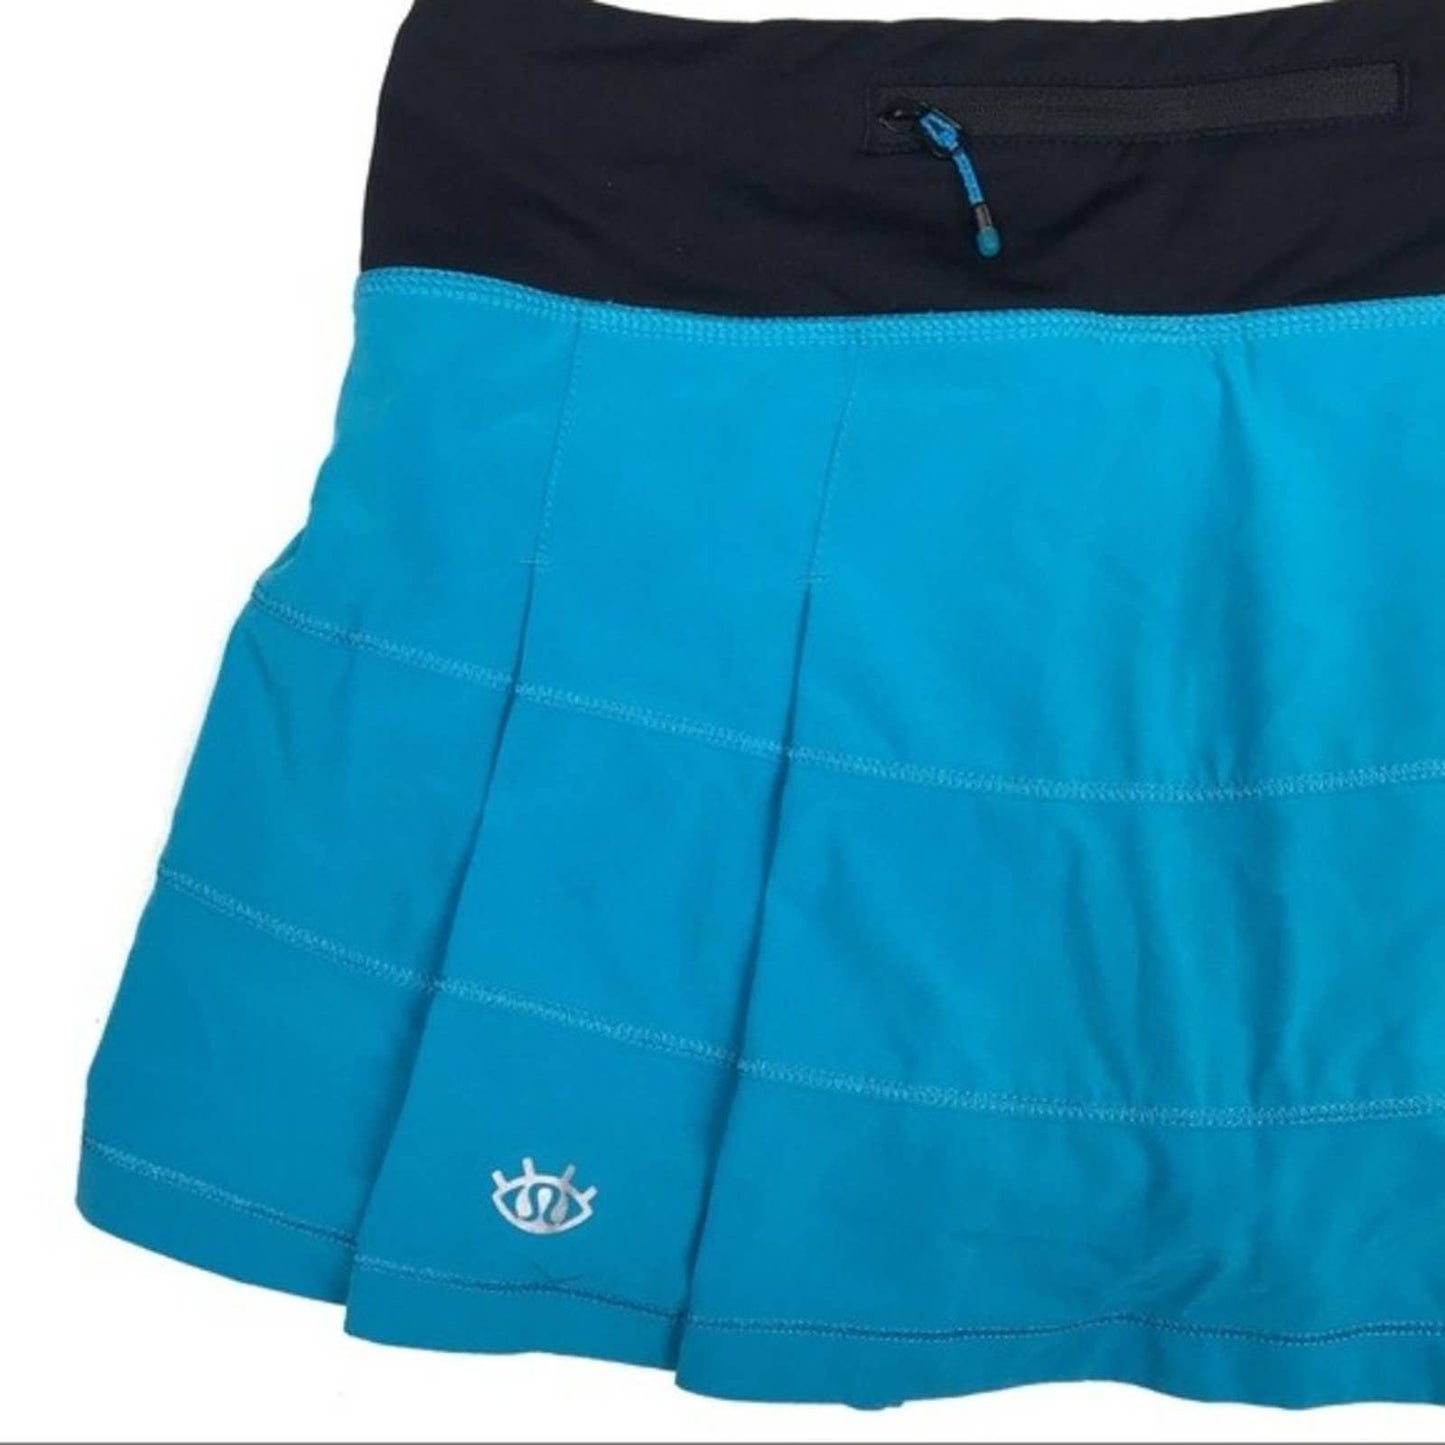 Lululemon Pace Rival 2014 Seawheeze Gusto Blue Tennis Running Skirt Skort Golf Size 4